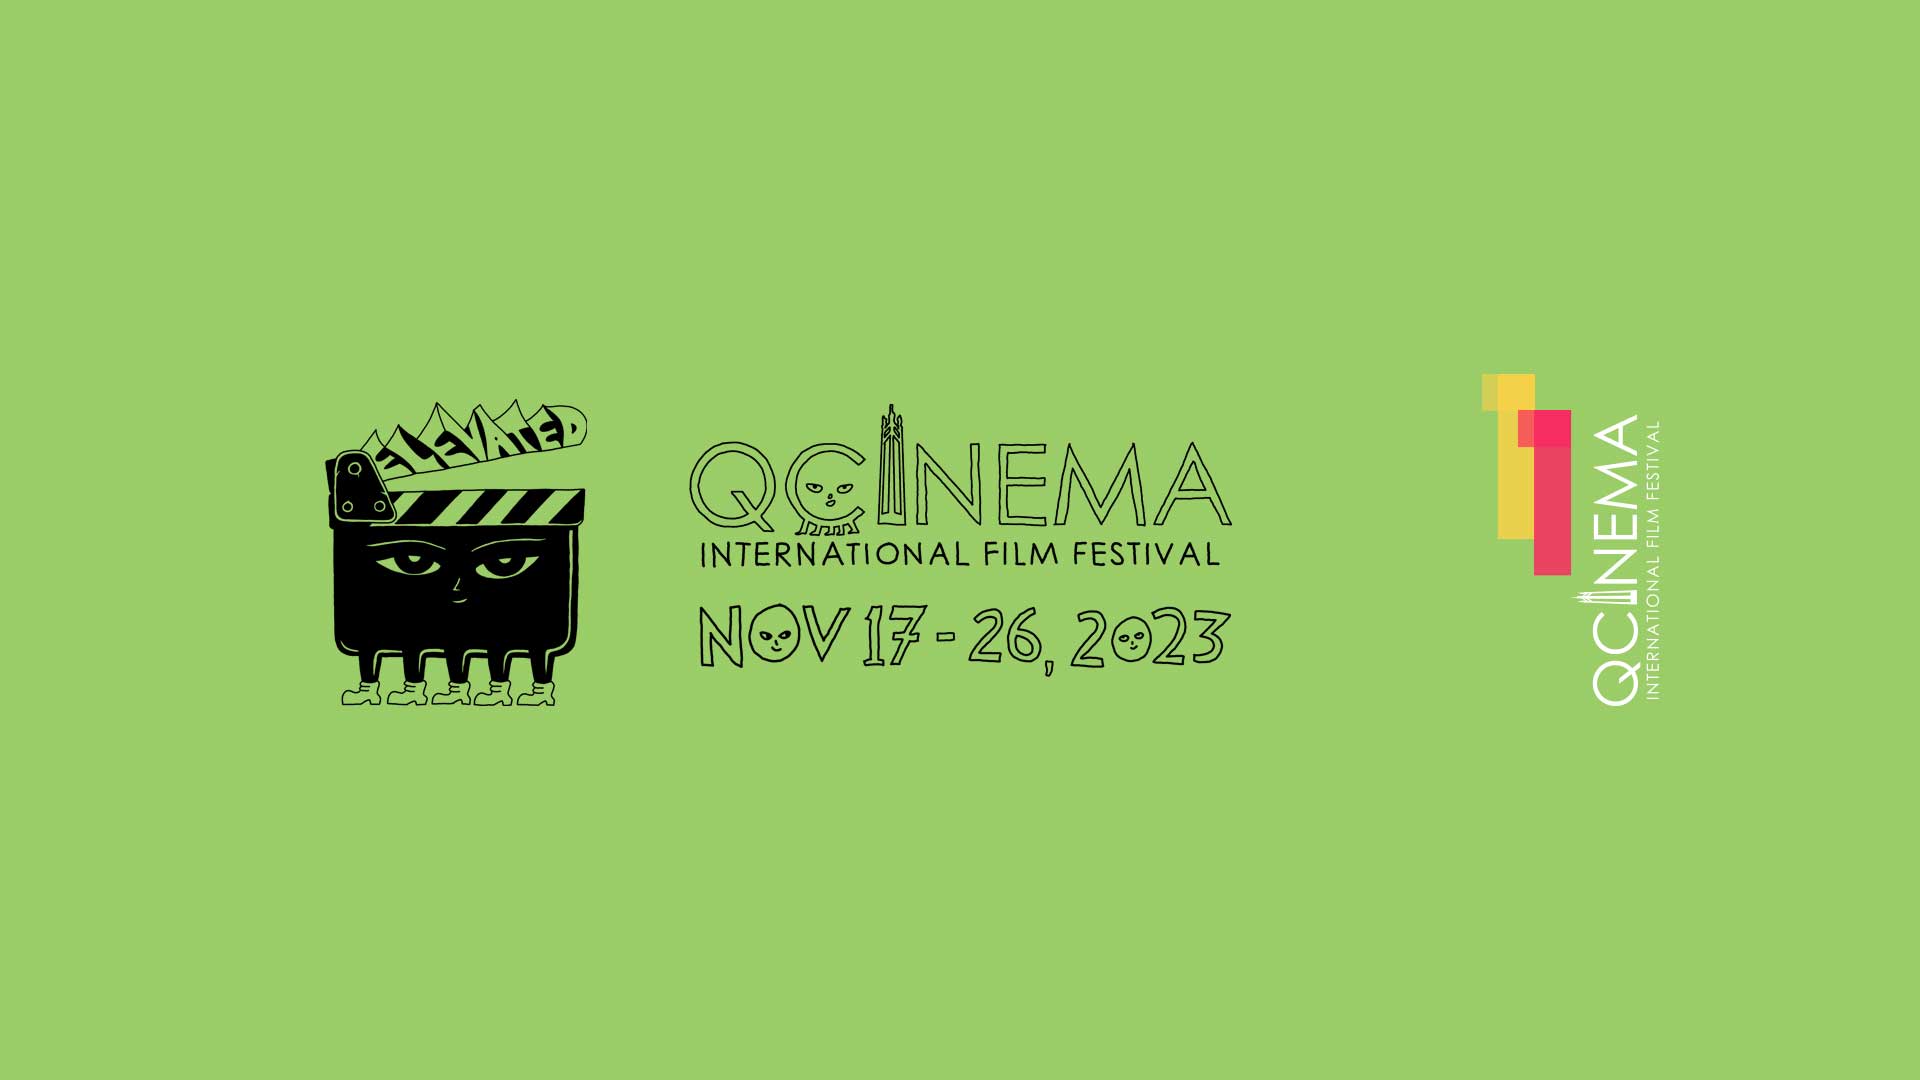 qcinema international film festival poster